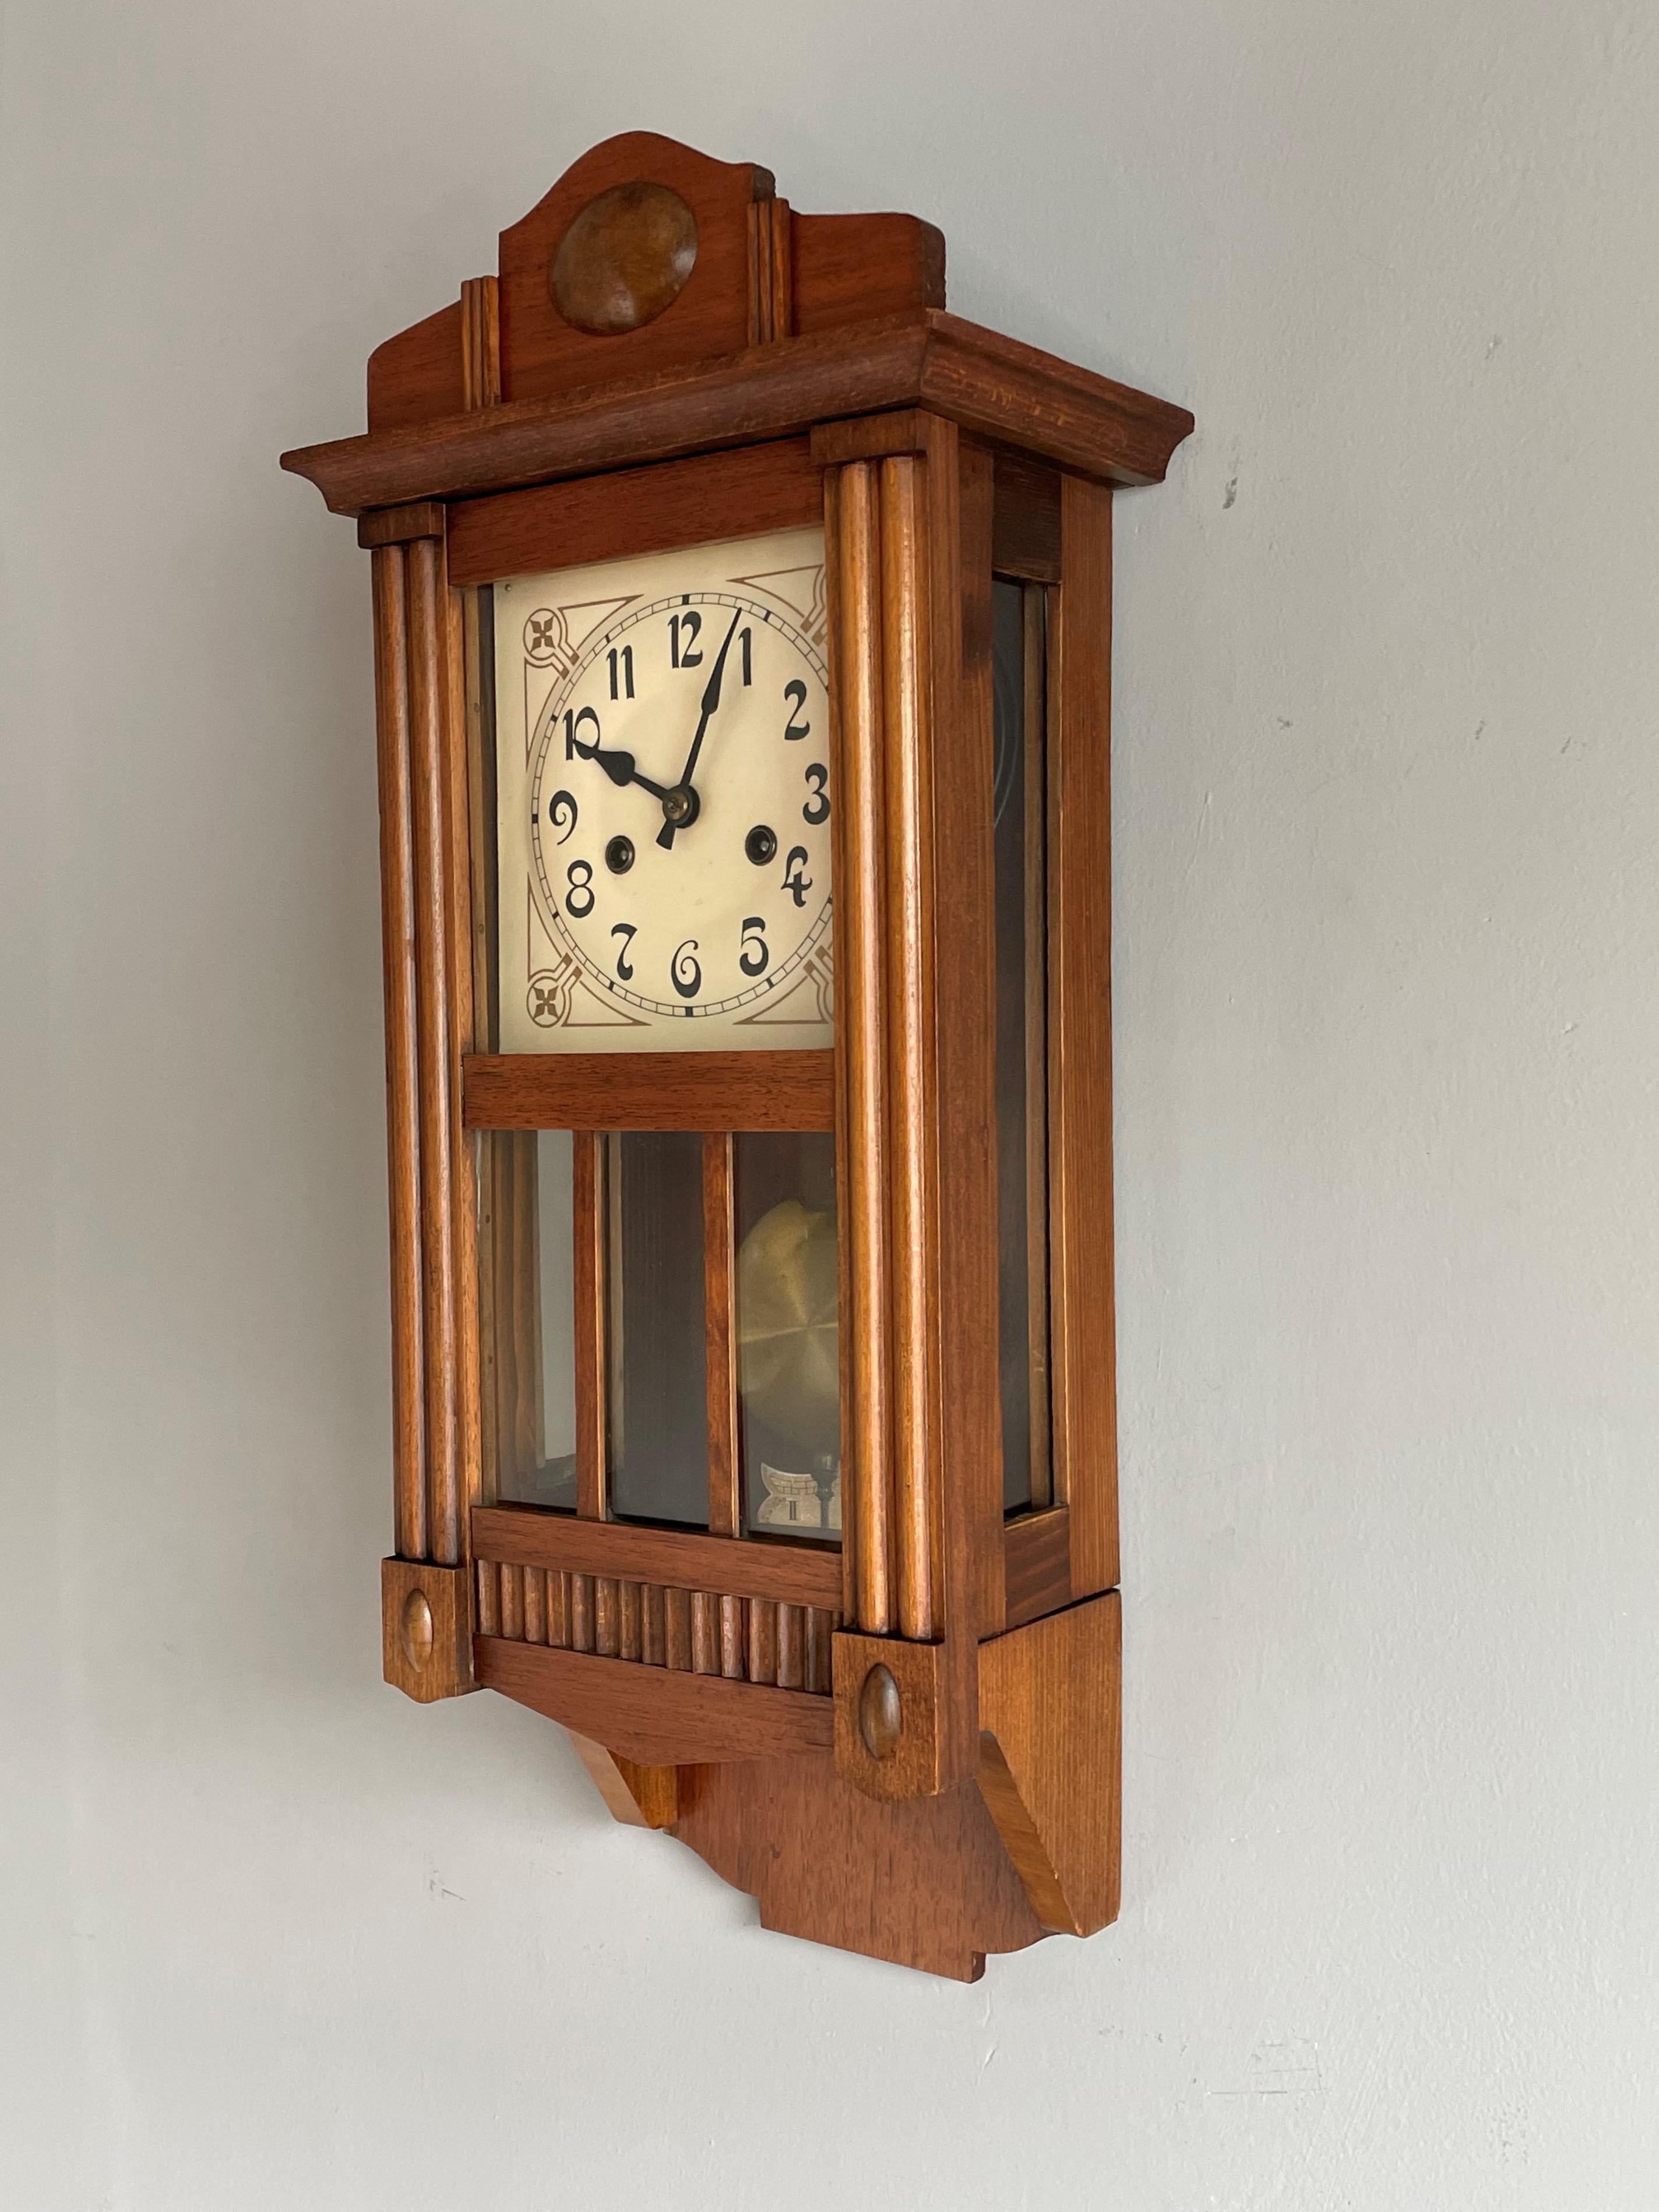 Rare & Small Geometrical Design Dutch Arts & Crafts Nutwood & Glass Wall Clock 1